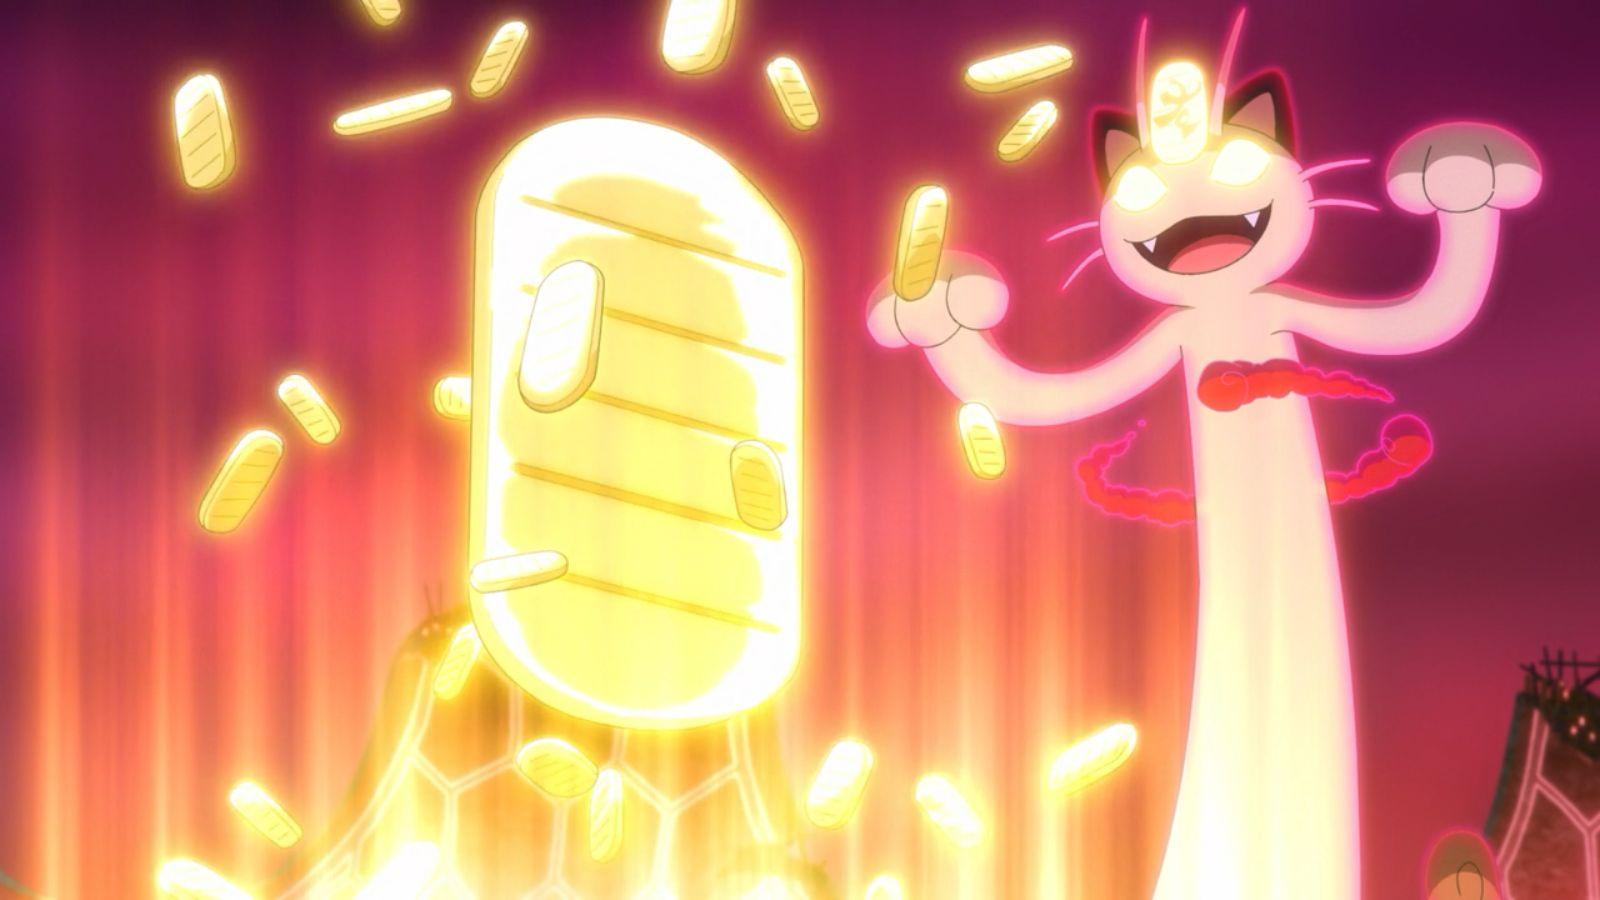 Gigantamax Meowth using Payday in Pokemon anime.